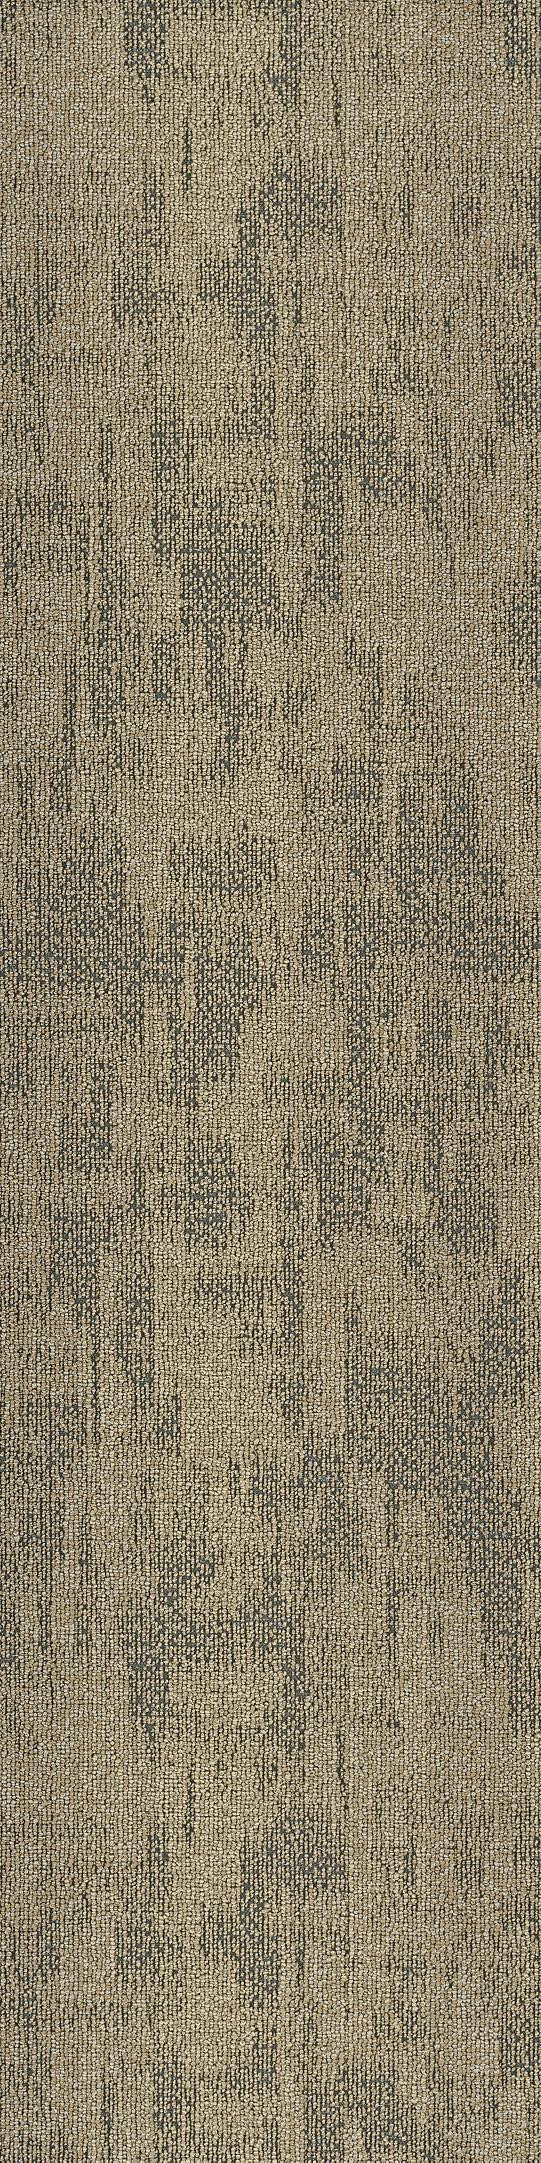 Shaw Metallic Alchemy Carpet Tile Quartz Graphite